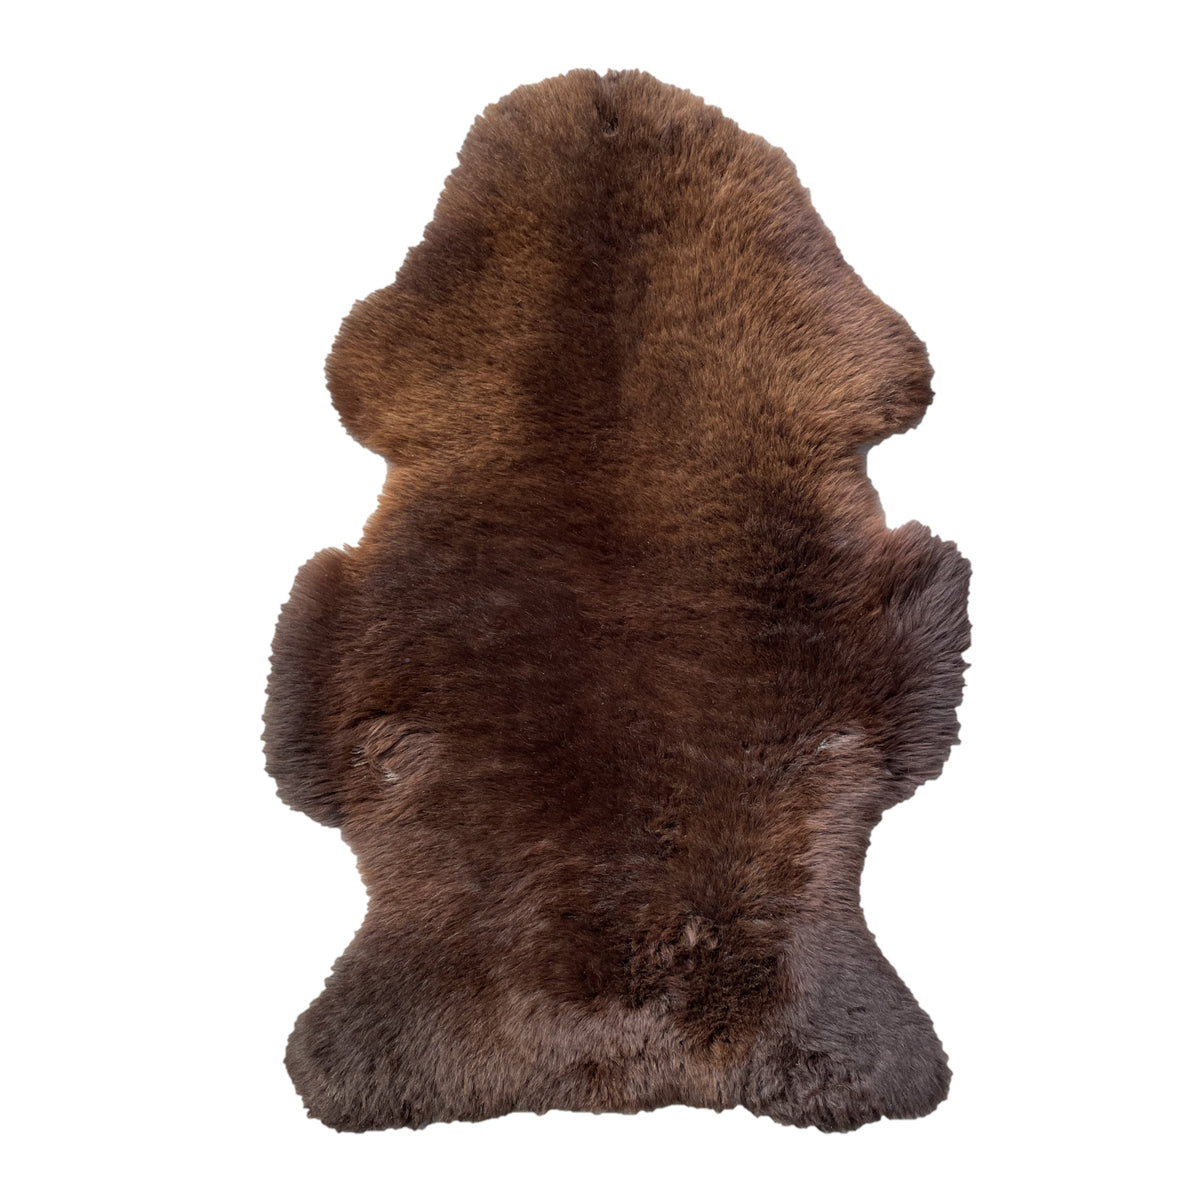 Plush Sheepskin Rug | Natural Brown | 10 sq.ft | $155 ea.